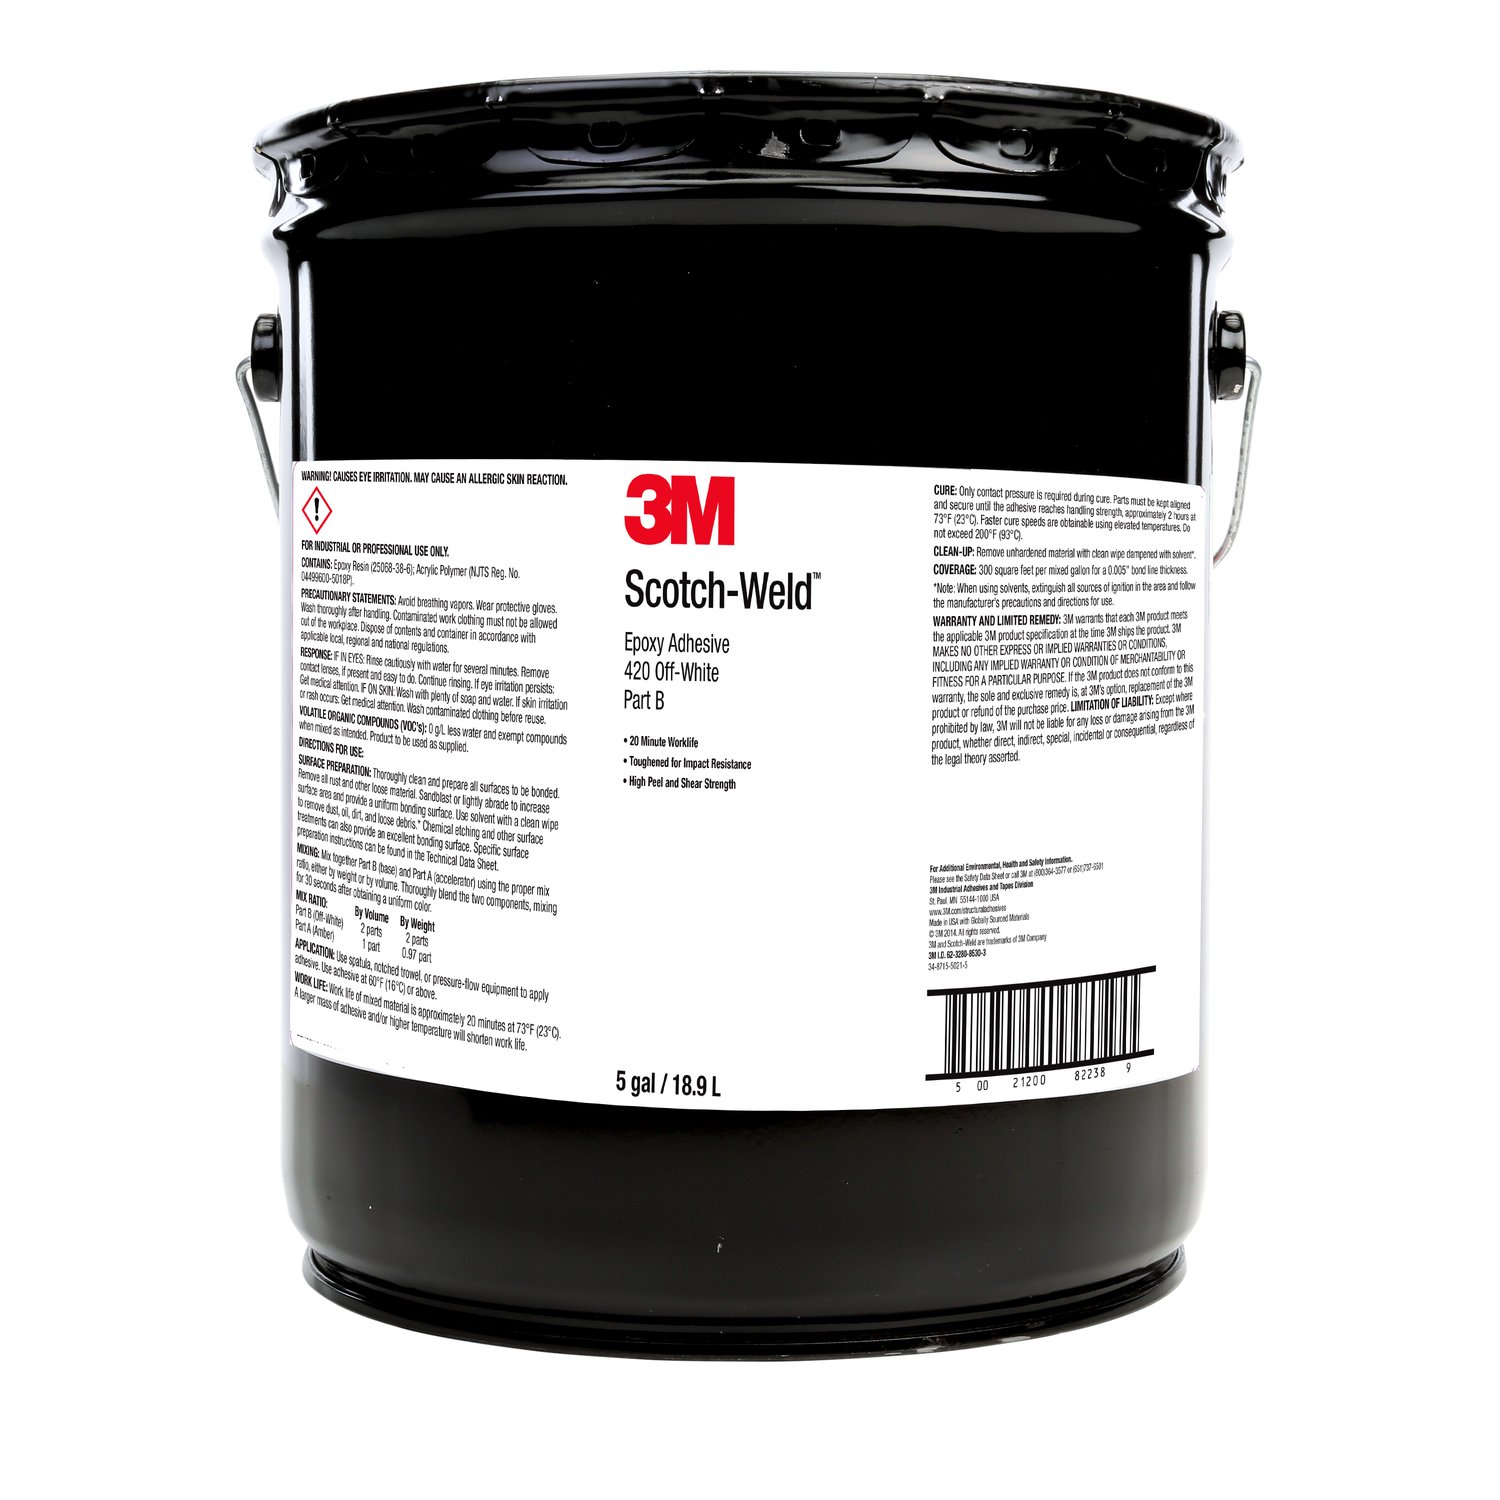 7100001145 - 3M Scotch-Weld Epoxy Adhesive 420, Off-White, Part B, 5 Gallon (Pail),
1 Each/Drum